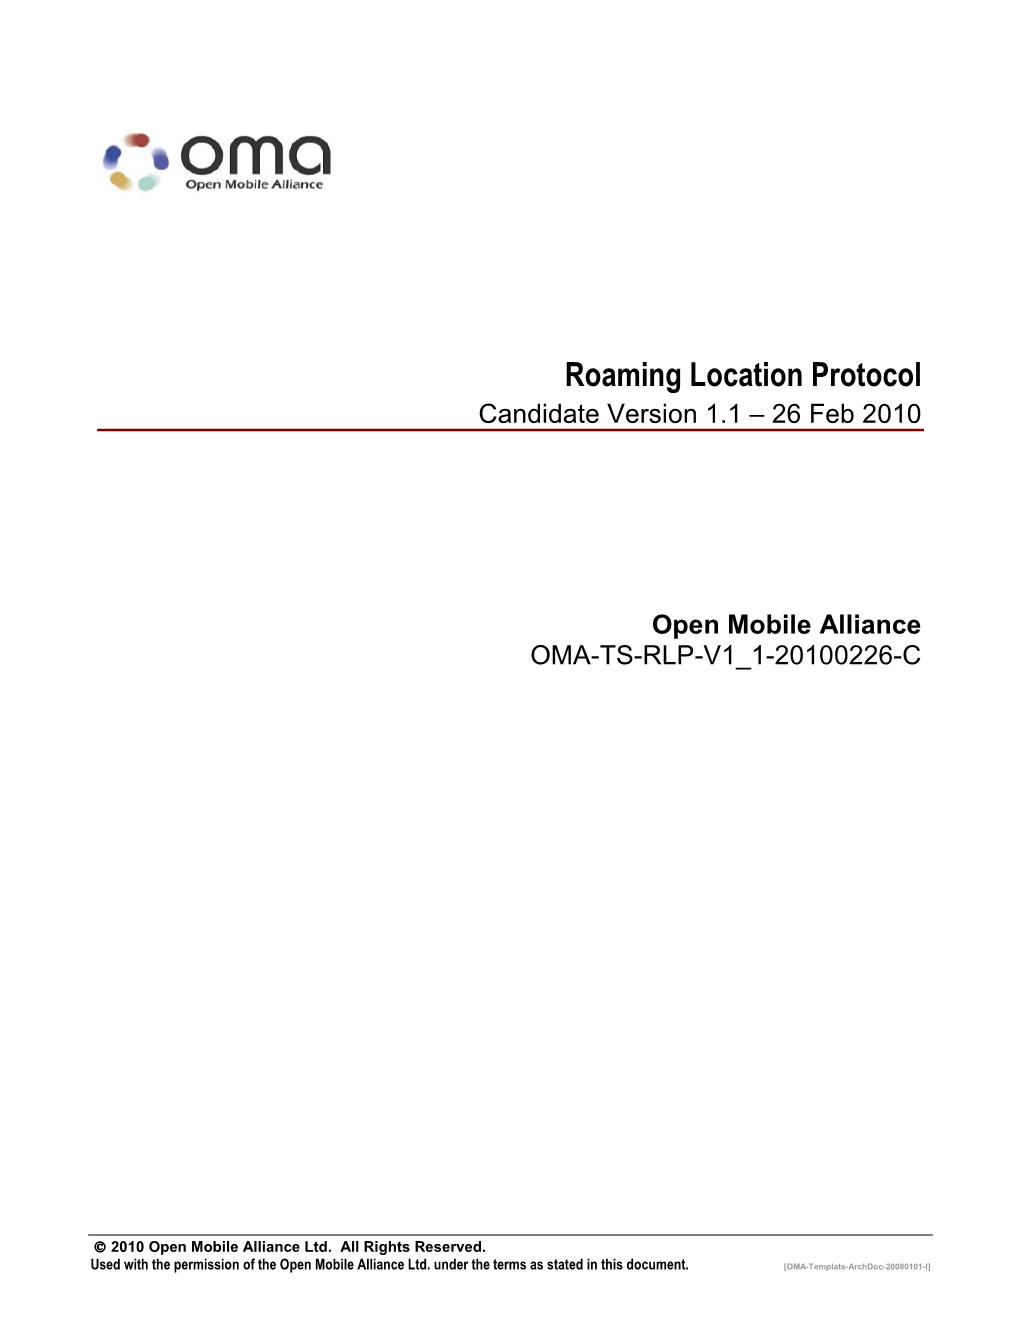 Roaming Location Protocol Candidate Version 1.1 – 26 Feb 2010